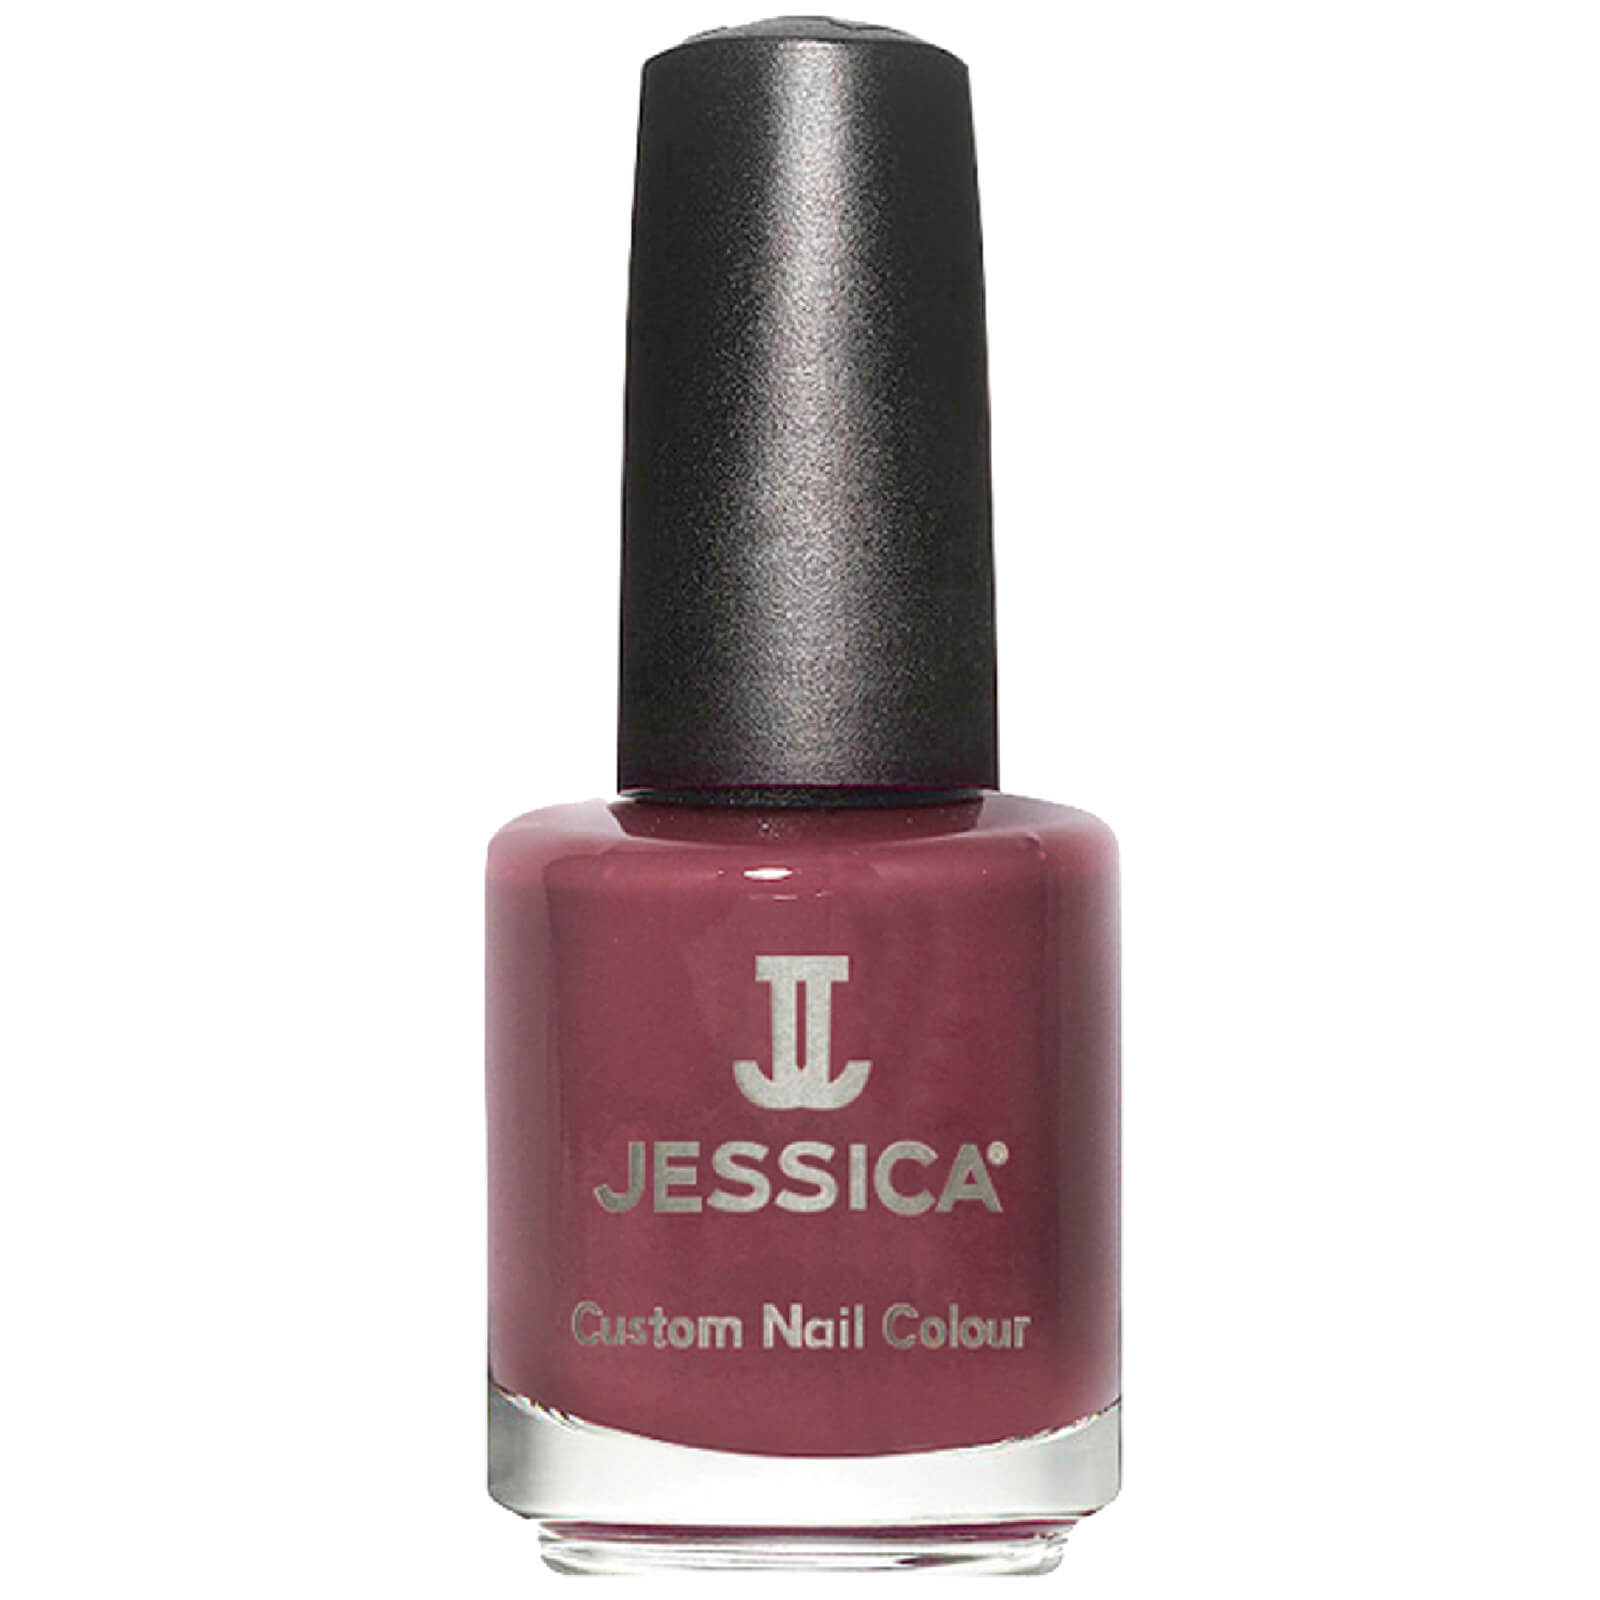 Image of Jessica Custom Nail Colour - Enter if you Dare 15ml